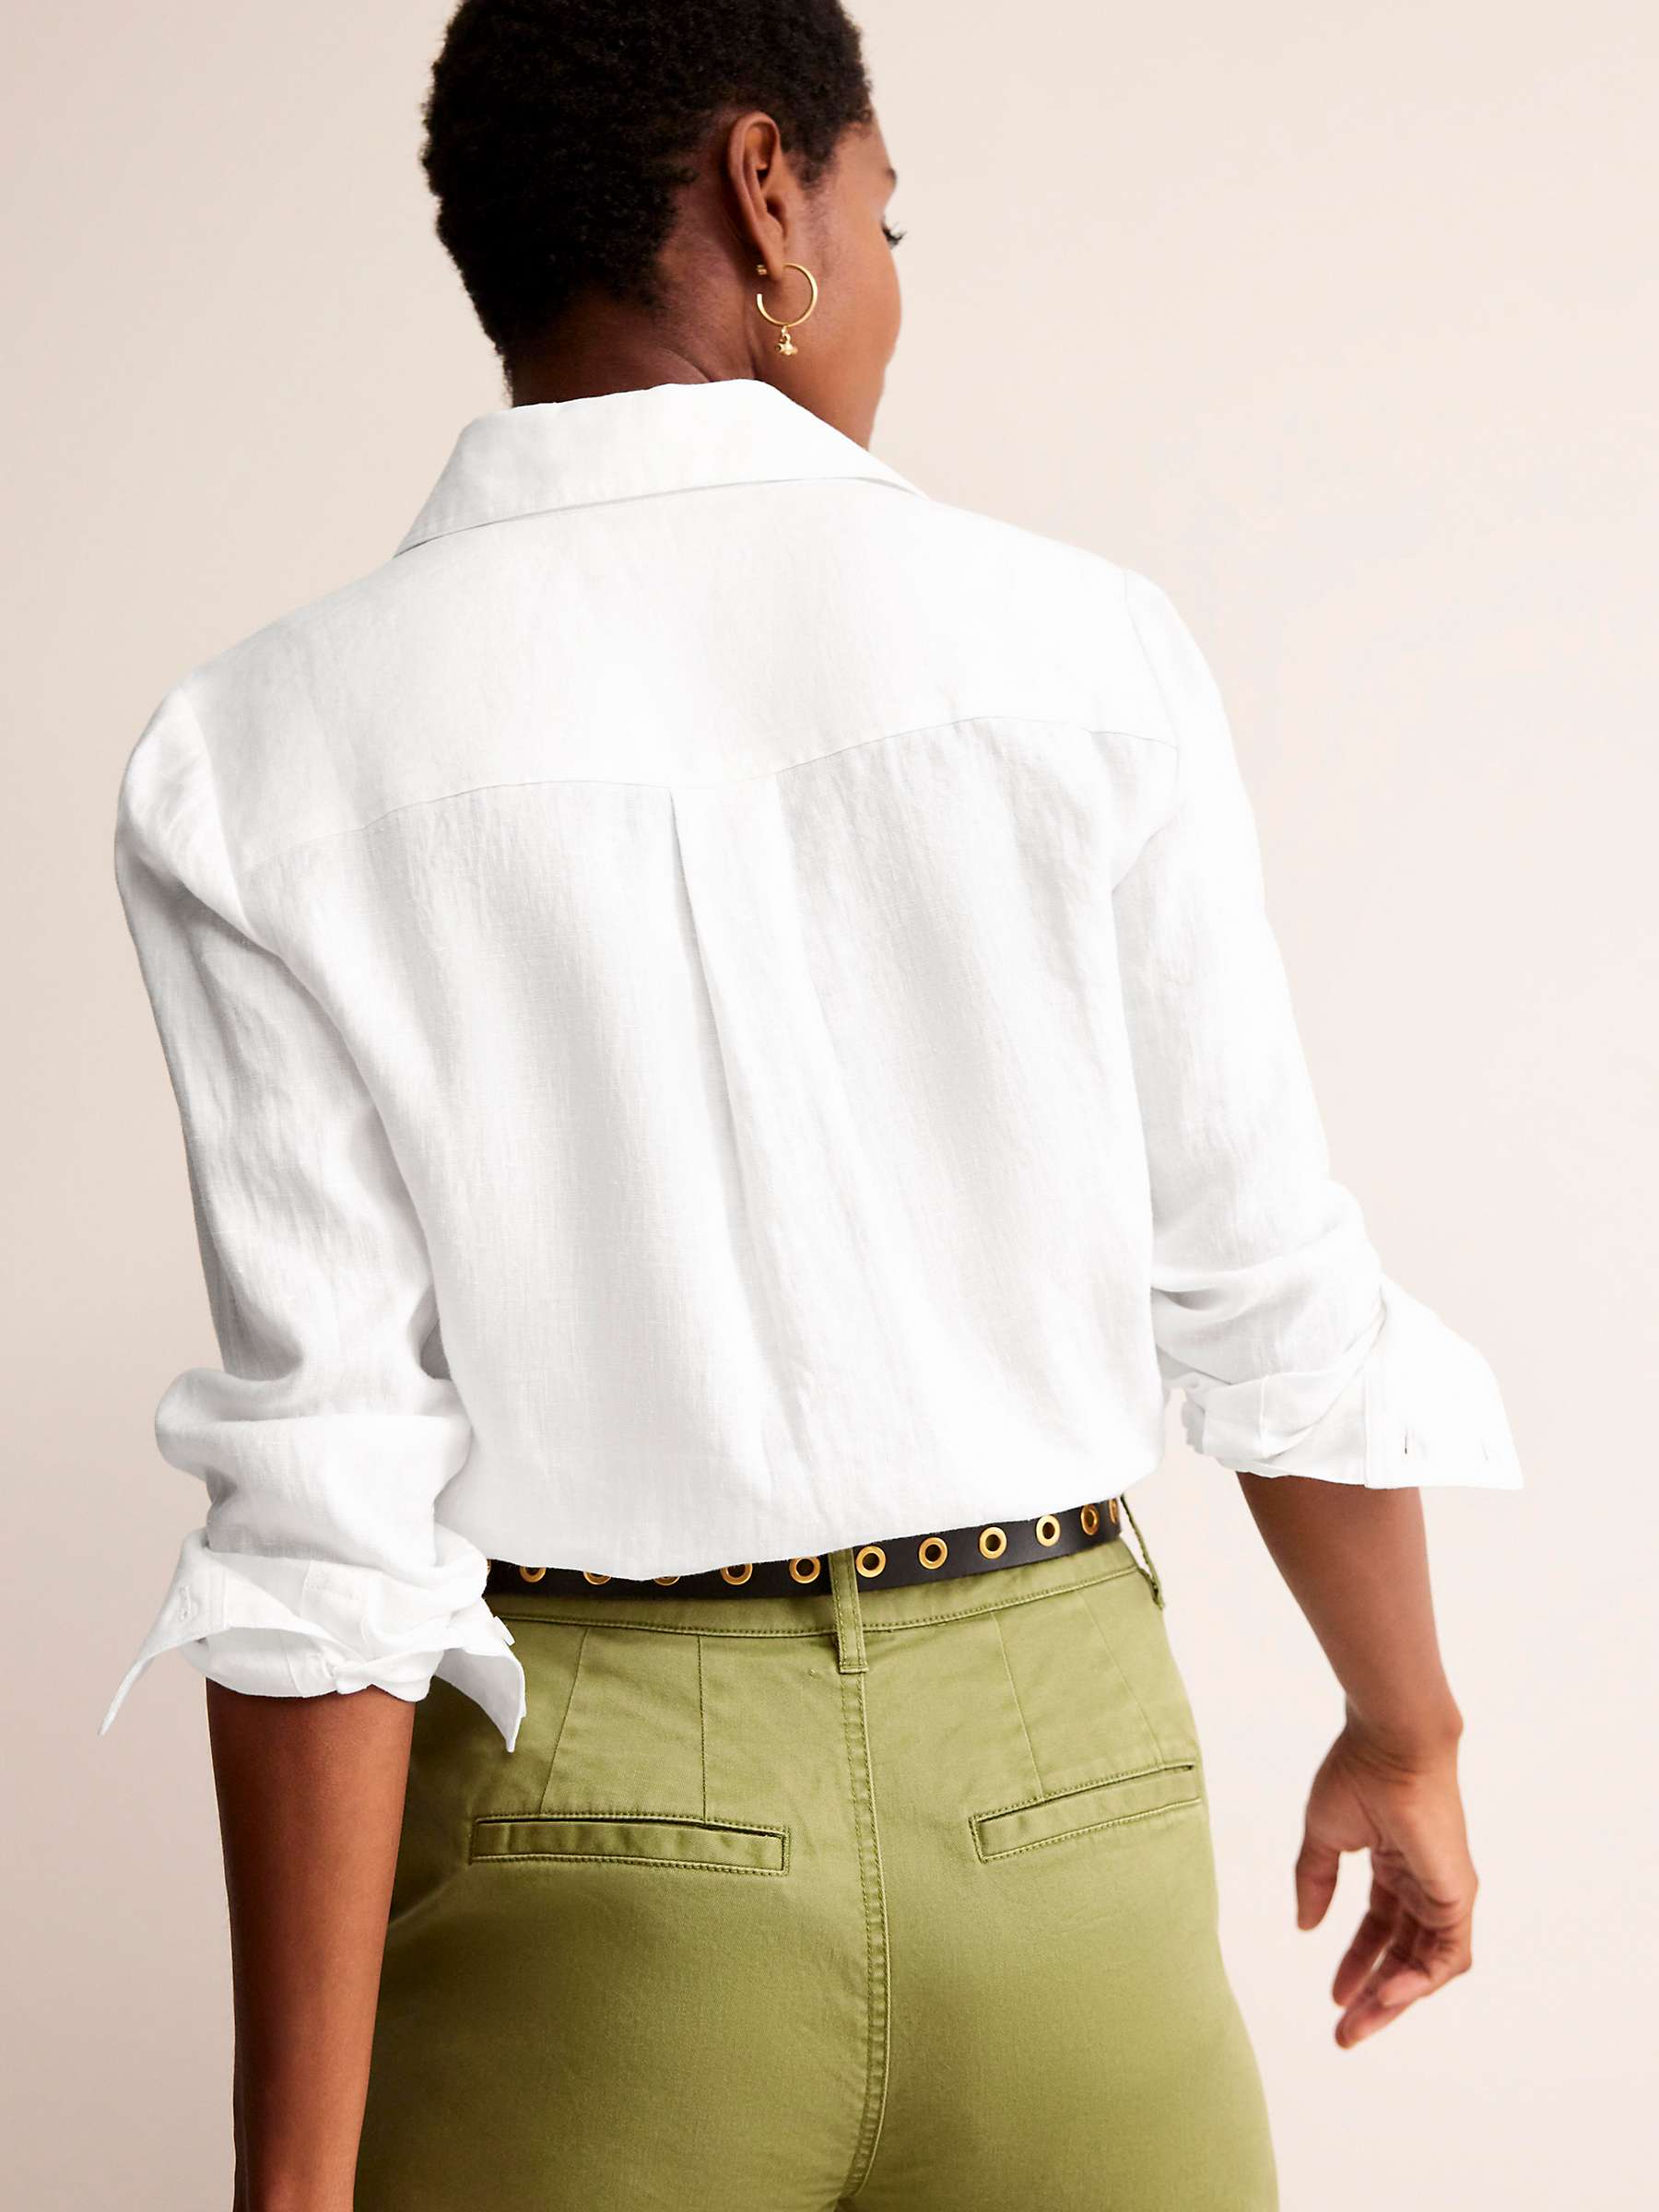 Buy Boden Sienna Linen Shirt, White Online at johnlewis.com